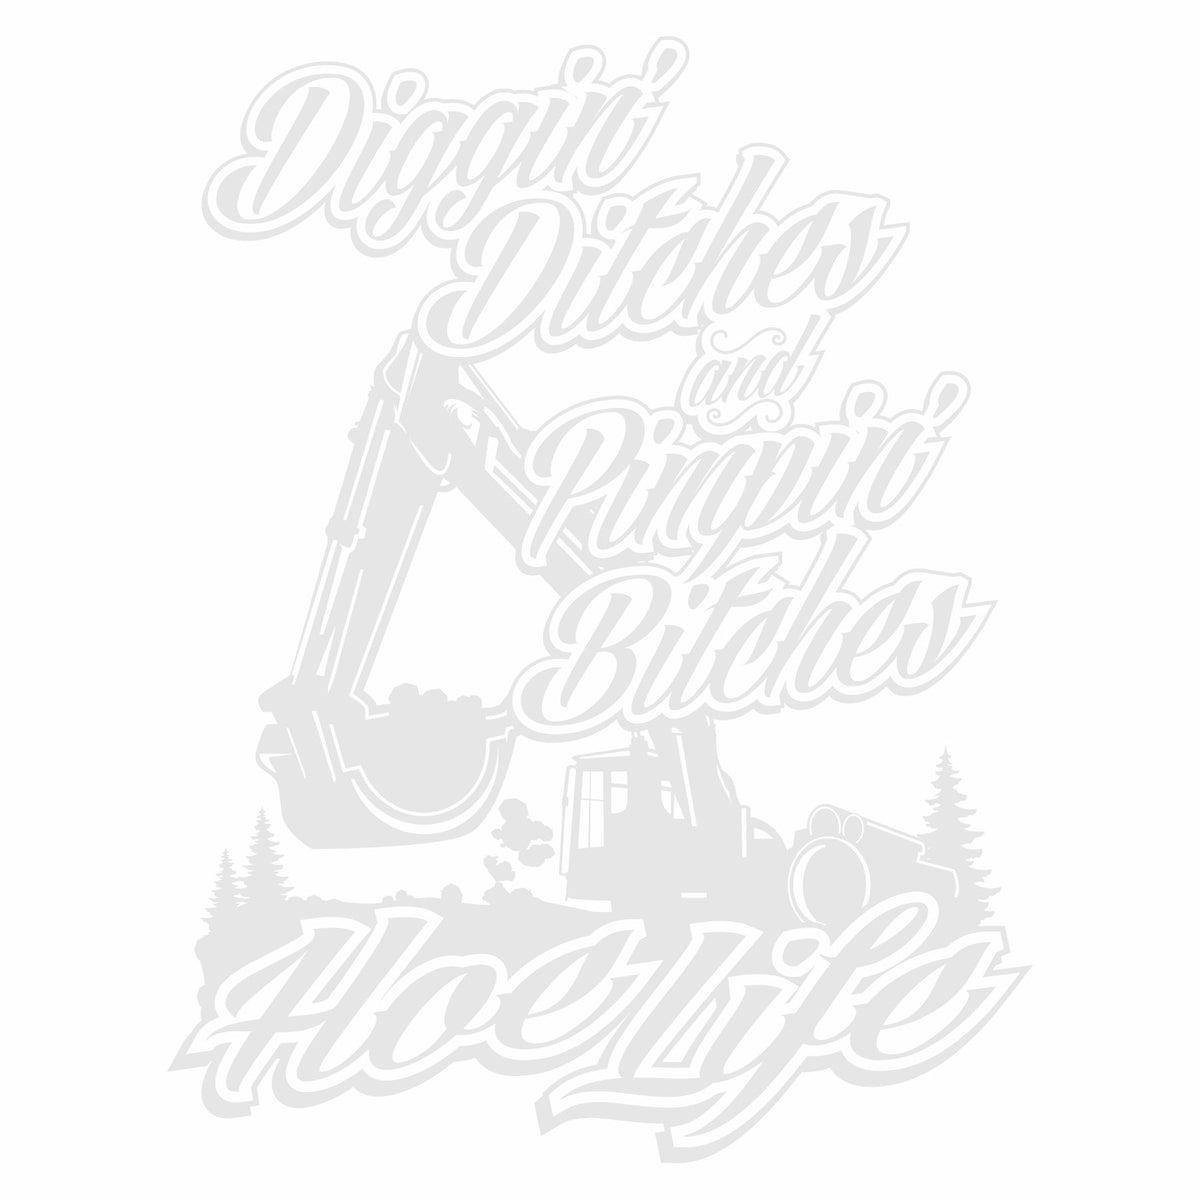 Diggin' Ditches and Pimpin' Bitches - Vinyl